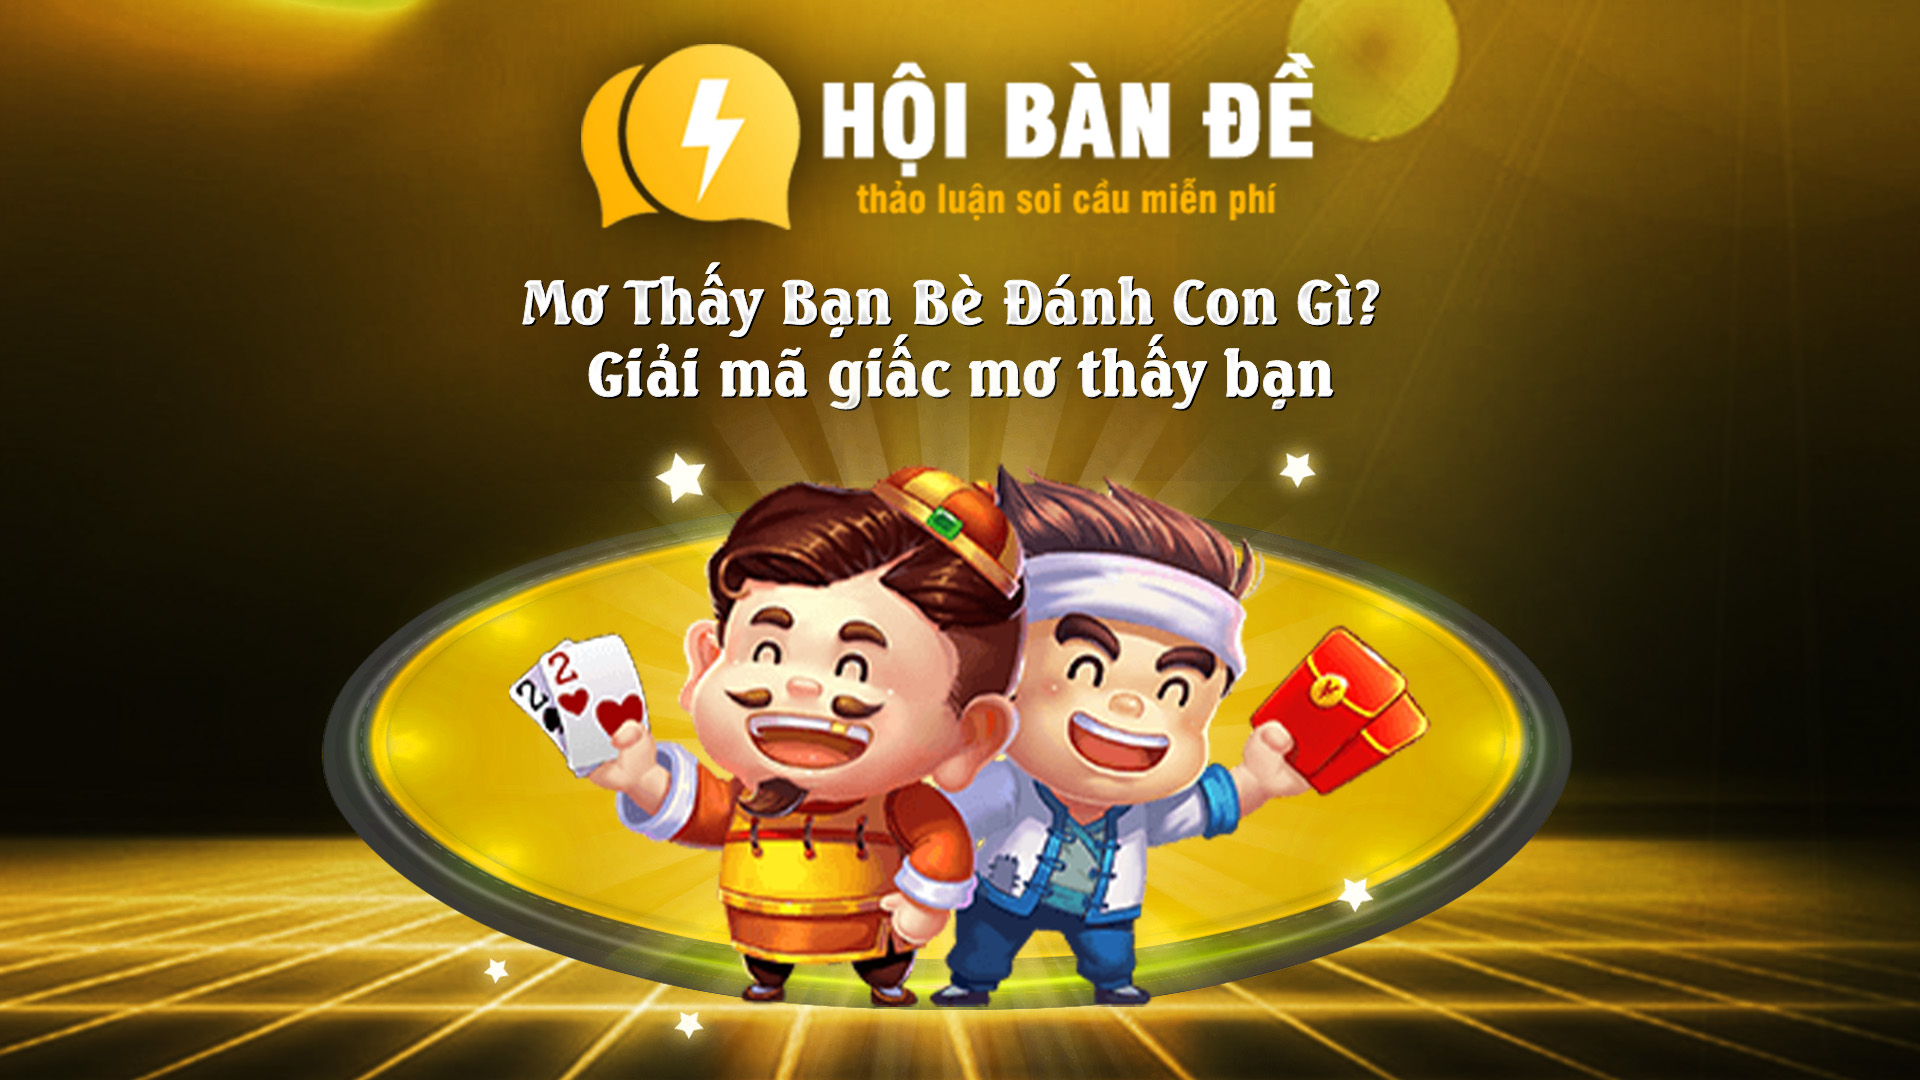 Mo Thay Ban Be Danh Con Gi Giai Ma Giac Mo Thay Ban